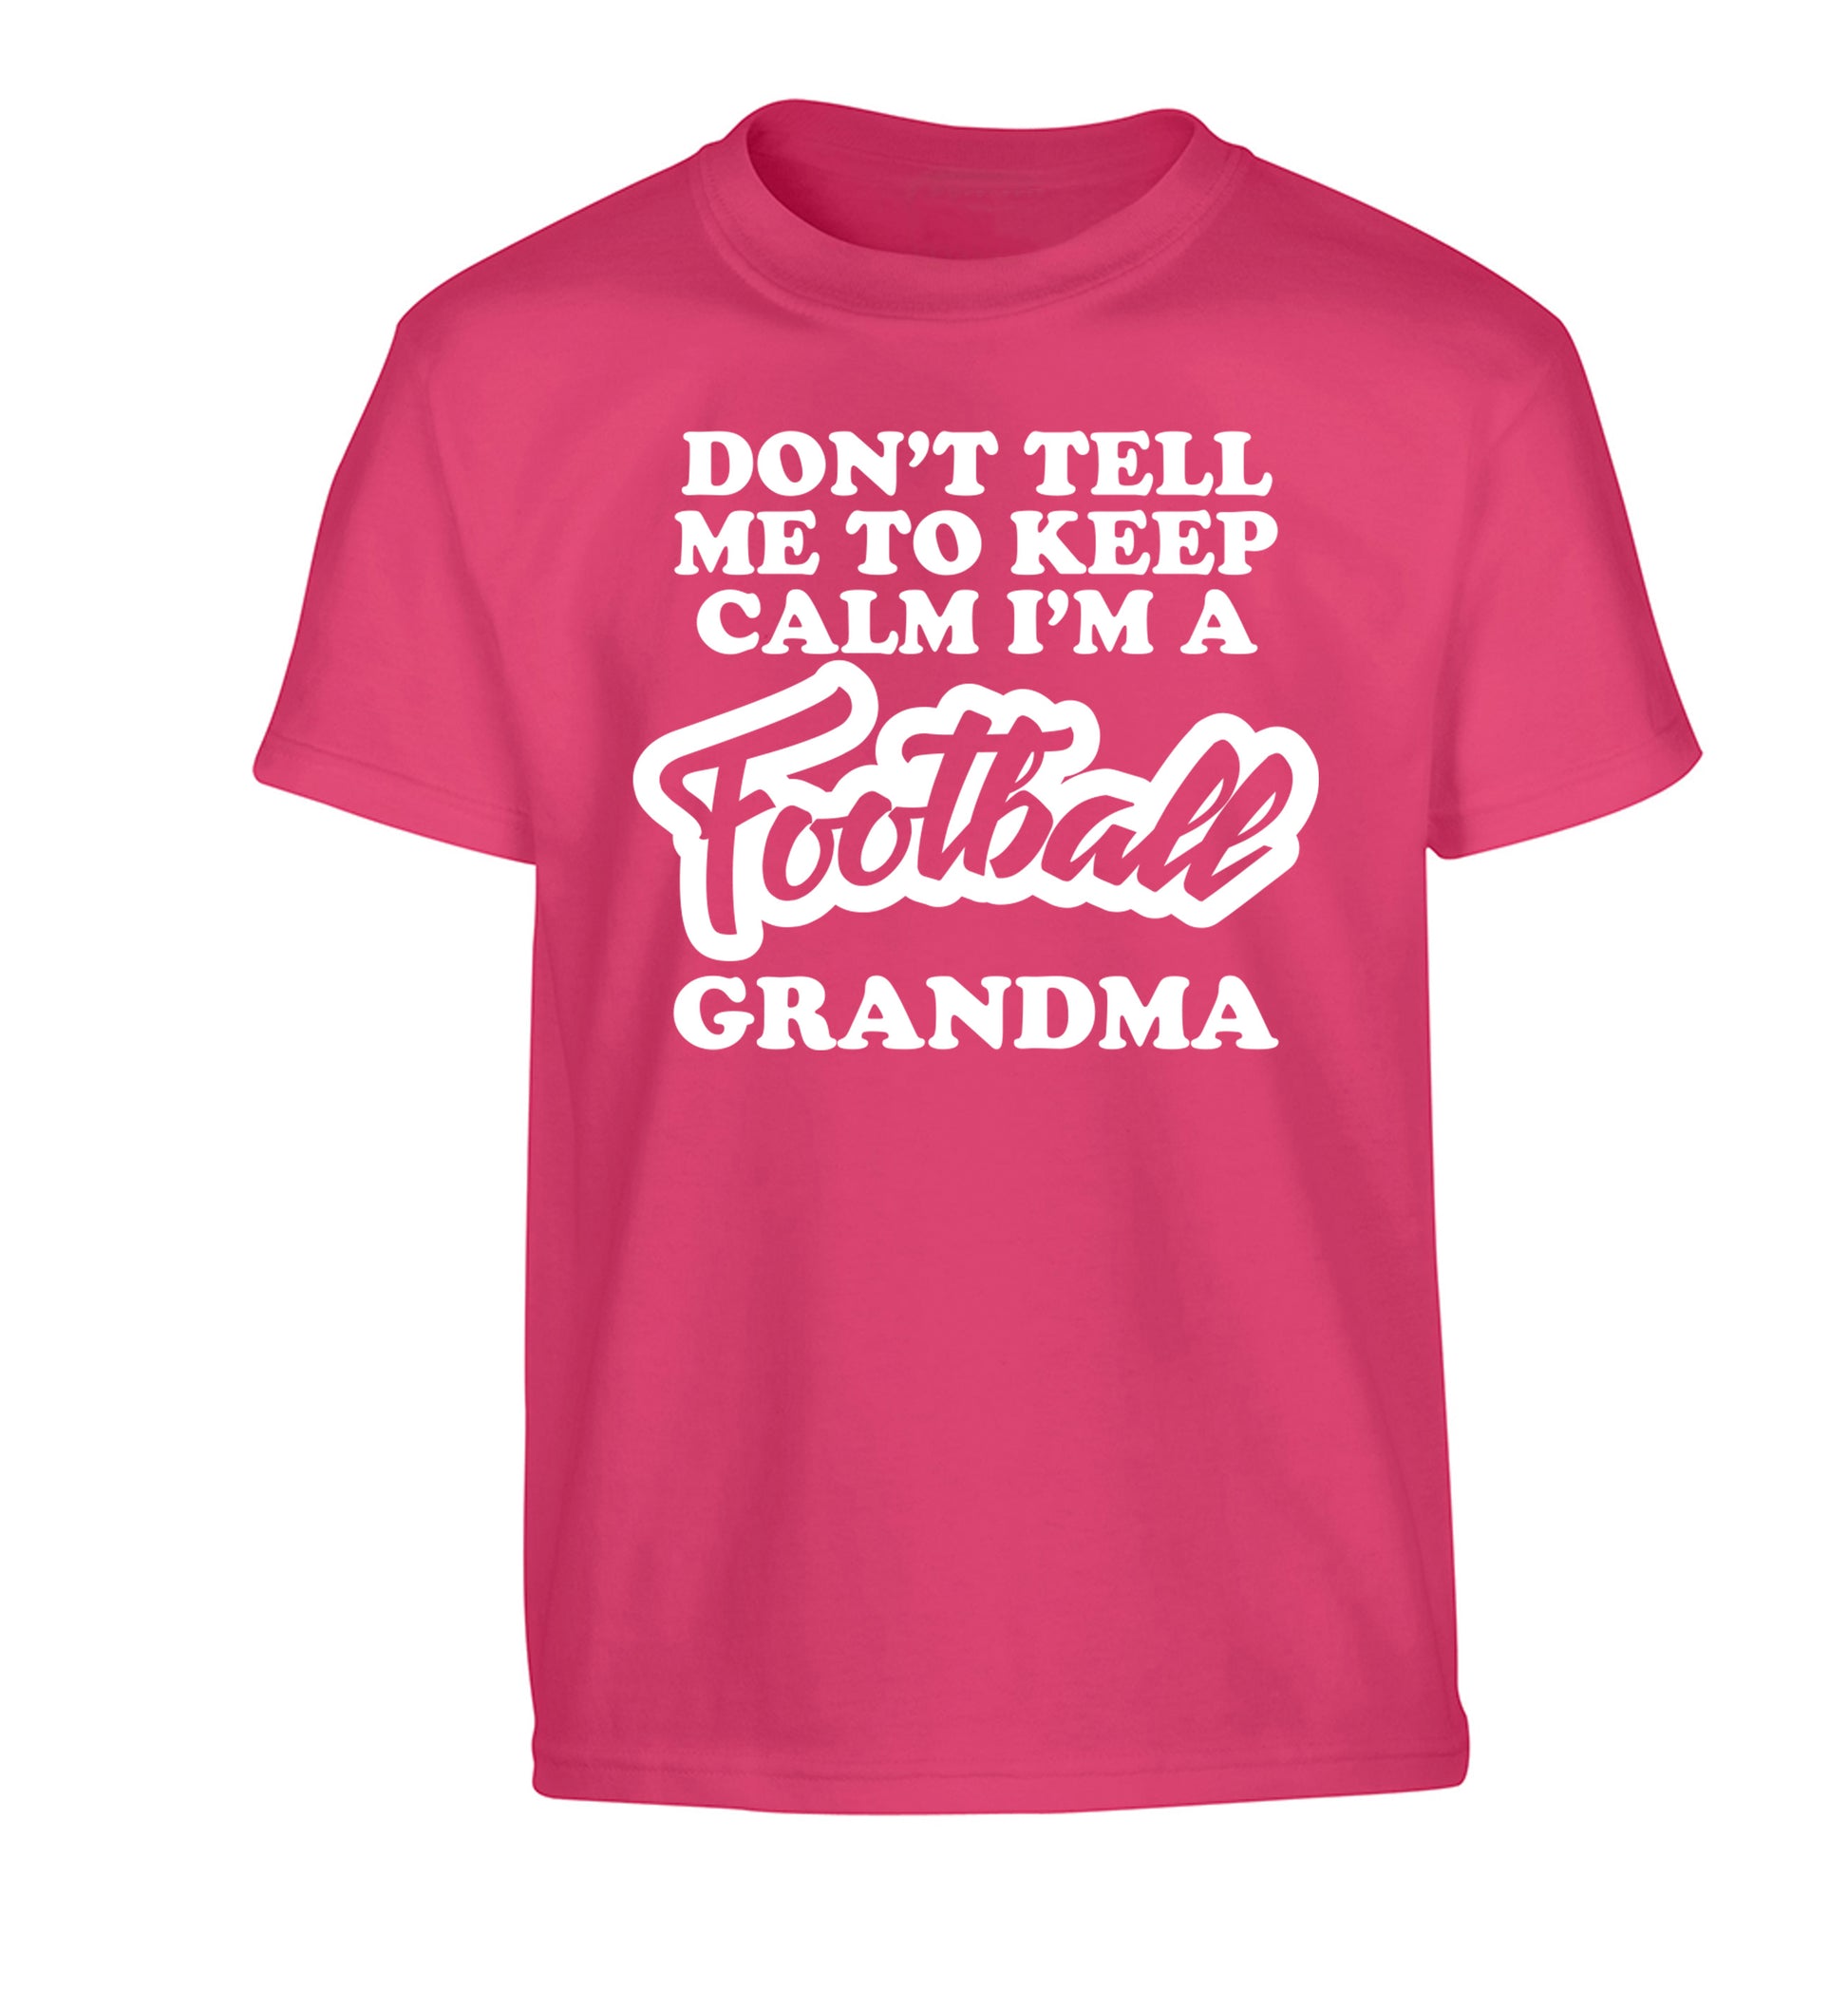 Don't tell me to keep calm I'm a football grandma Children's pink Tshirt 12-14 Years